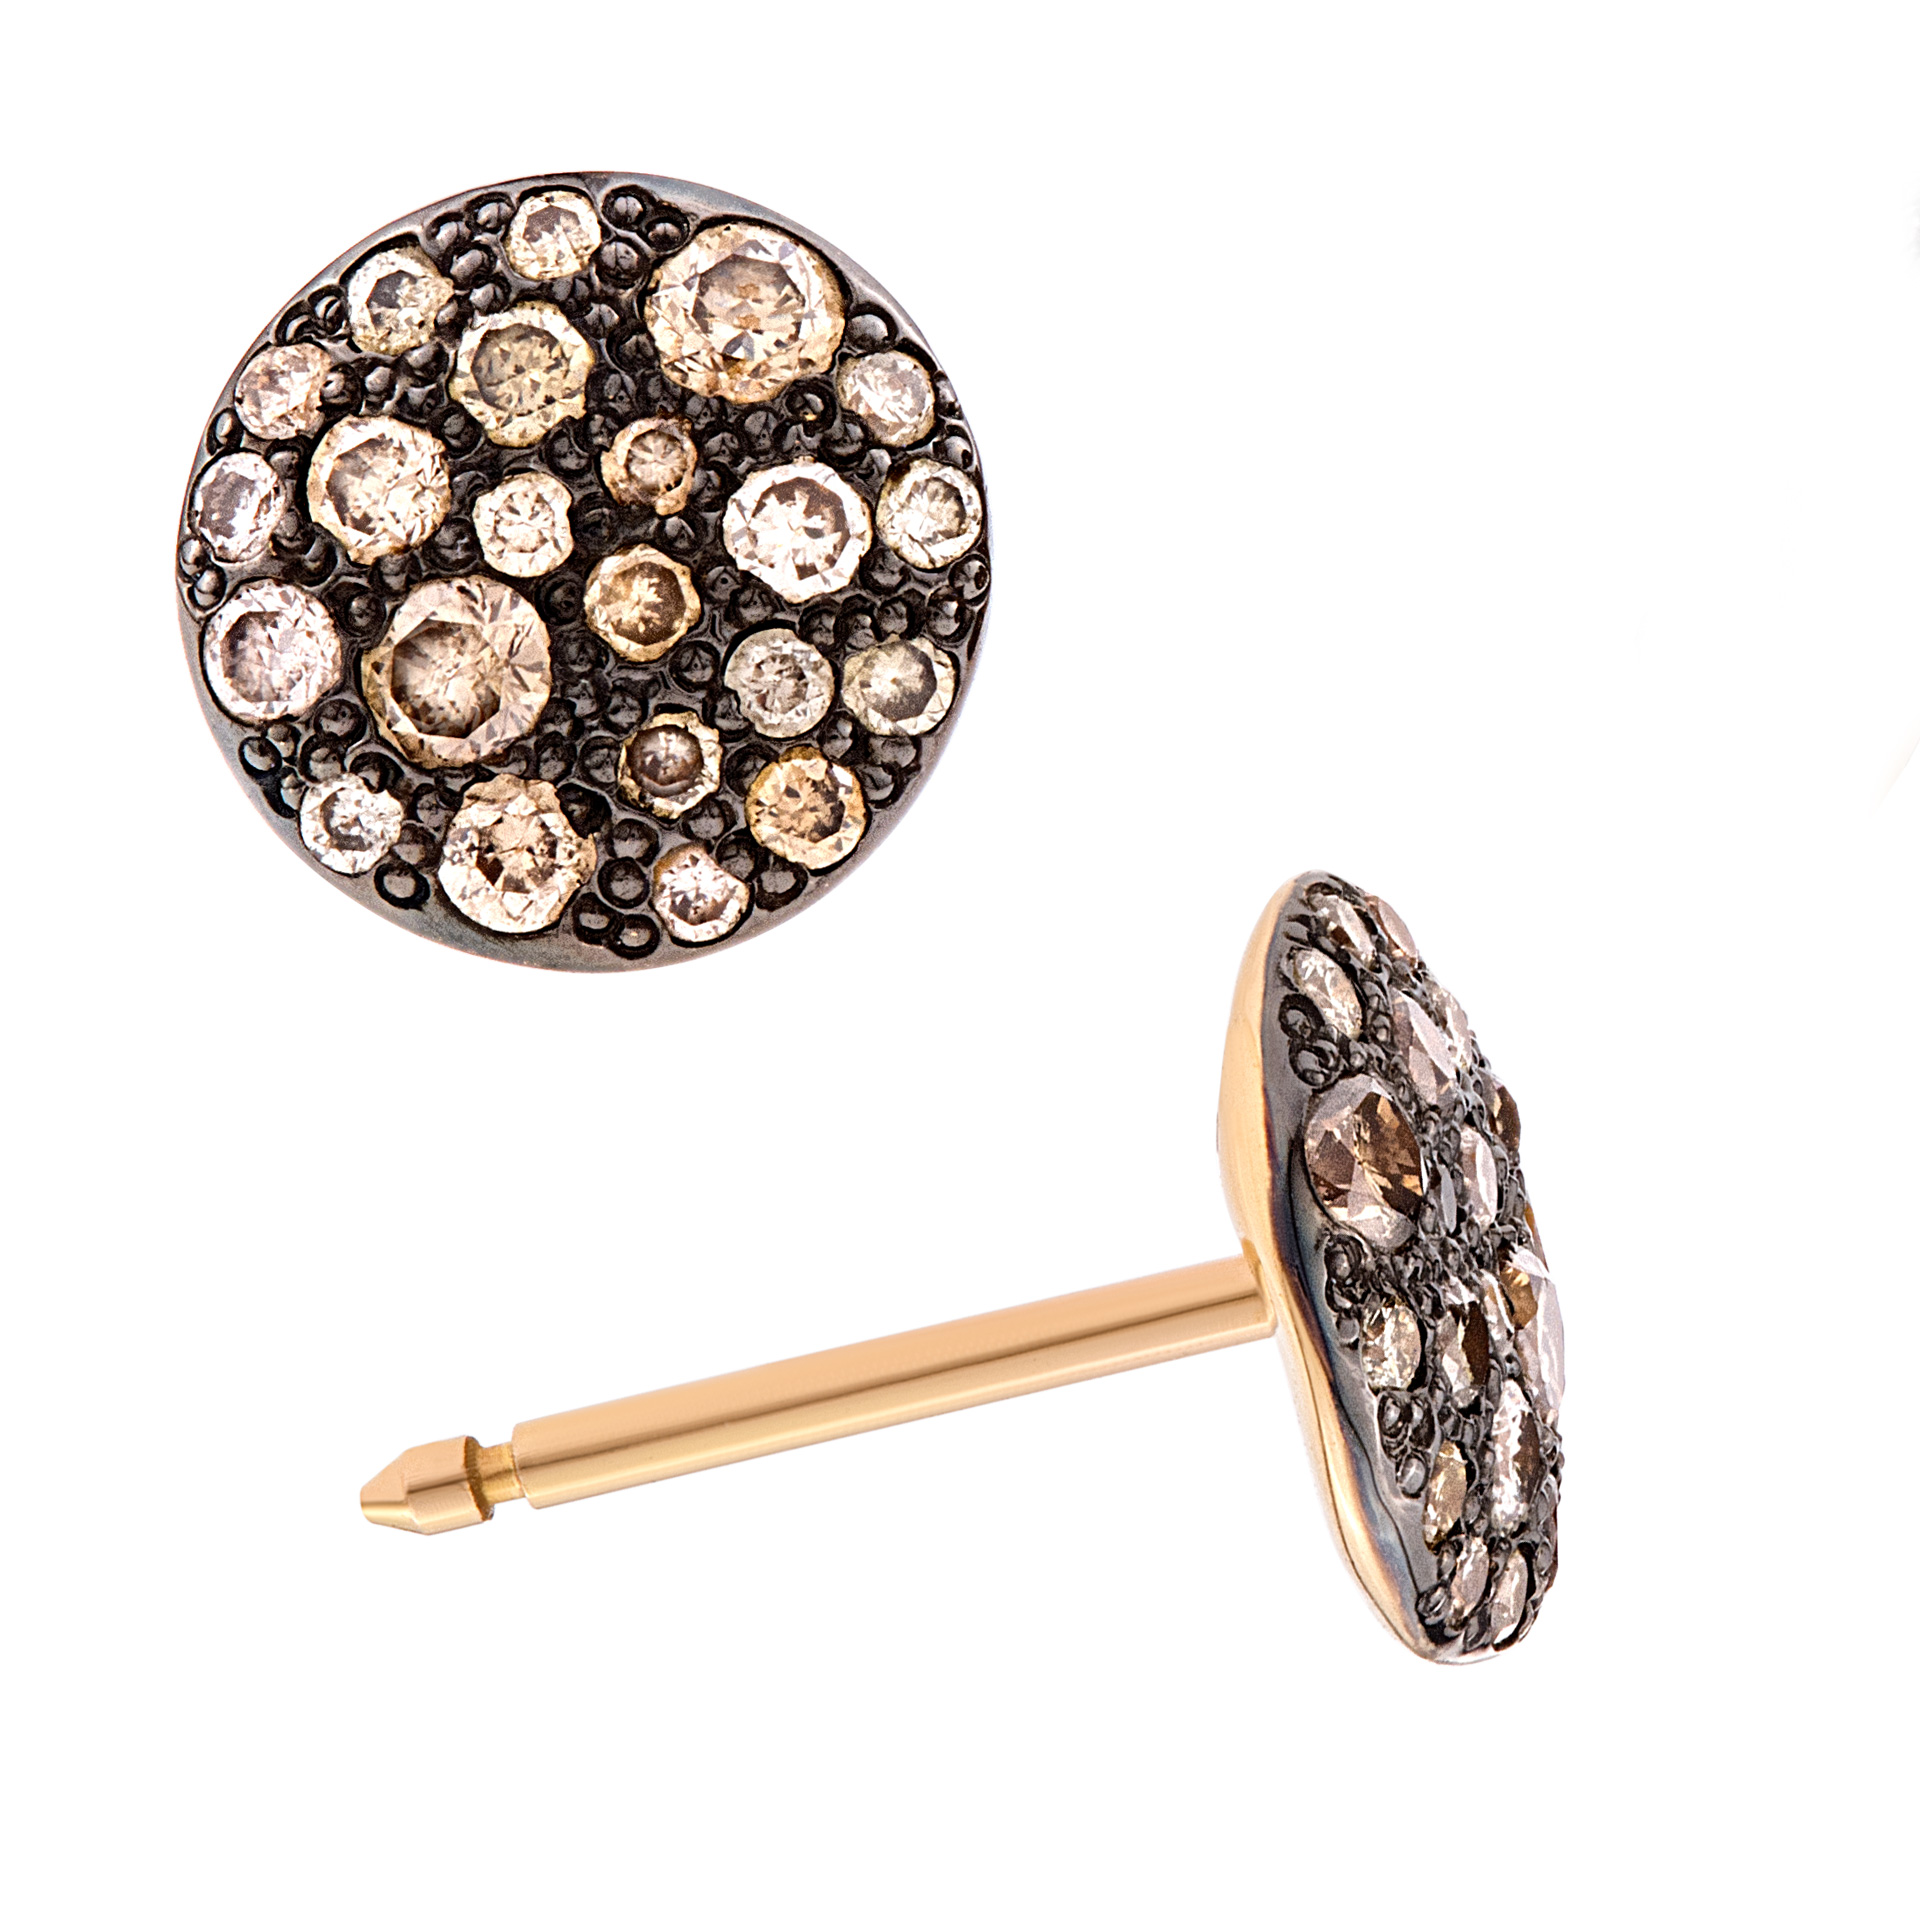 Pomellato Lucciole earrings with diamonds in 18k image 1